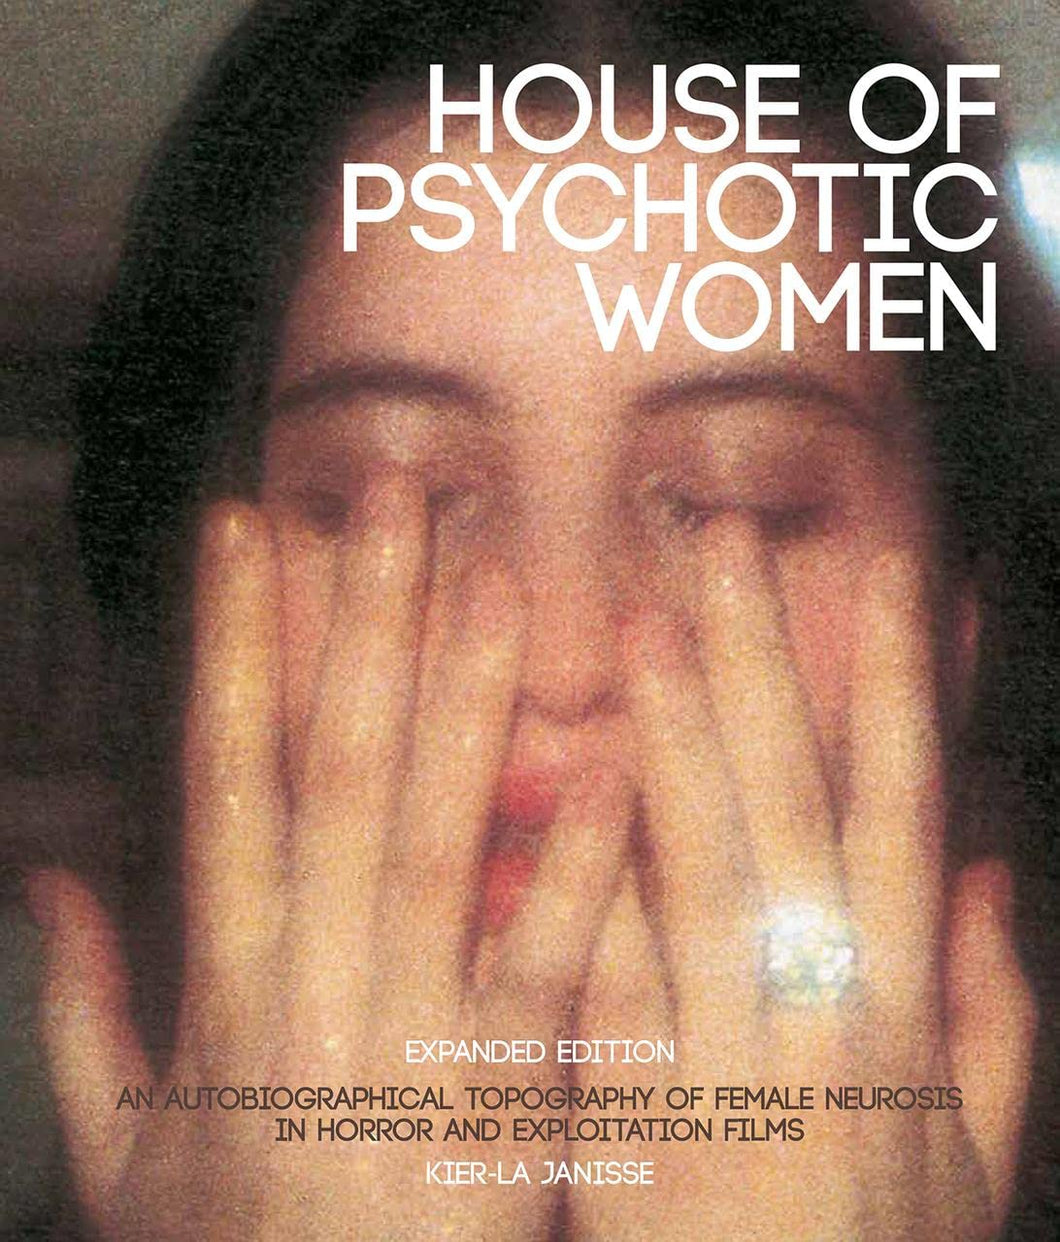 Kier-La Janisse: House of Psychotic Women (Expanded Edition)